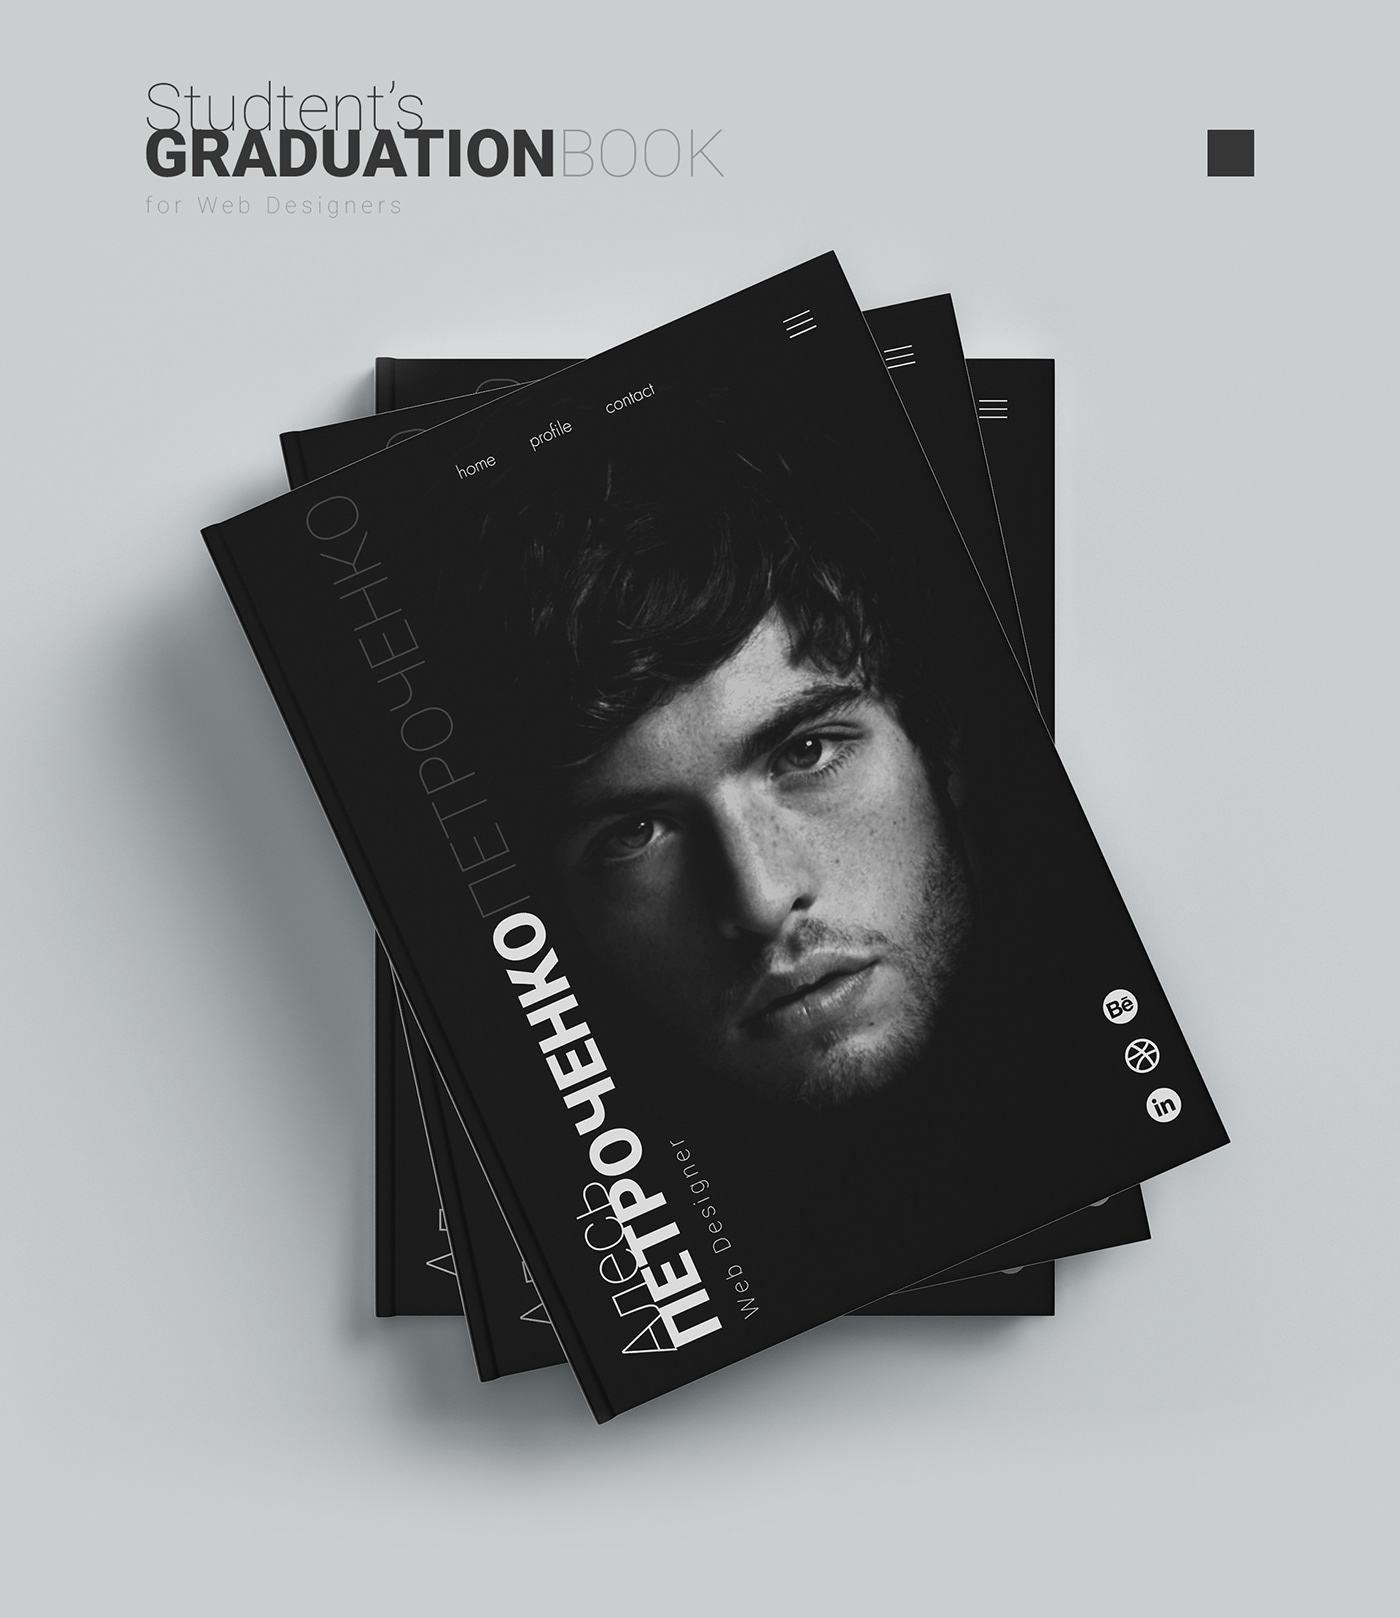 Adobe InDesign Adobe Photoshop Album Layout photo graduation polygraphy Black&white Porfolio photo book